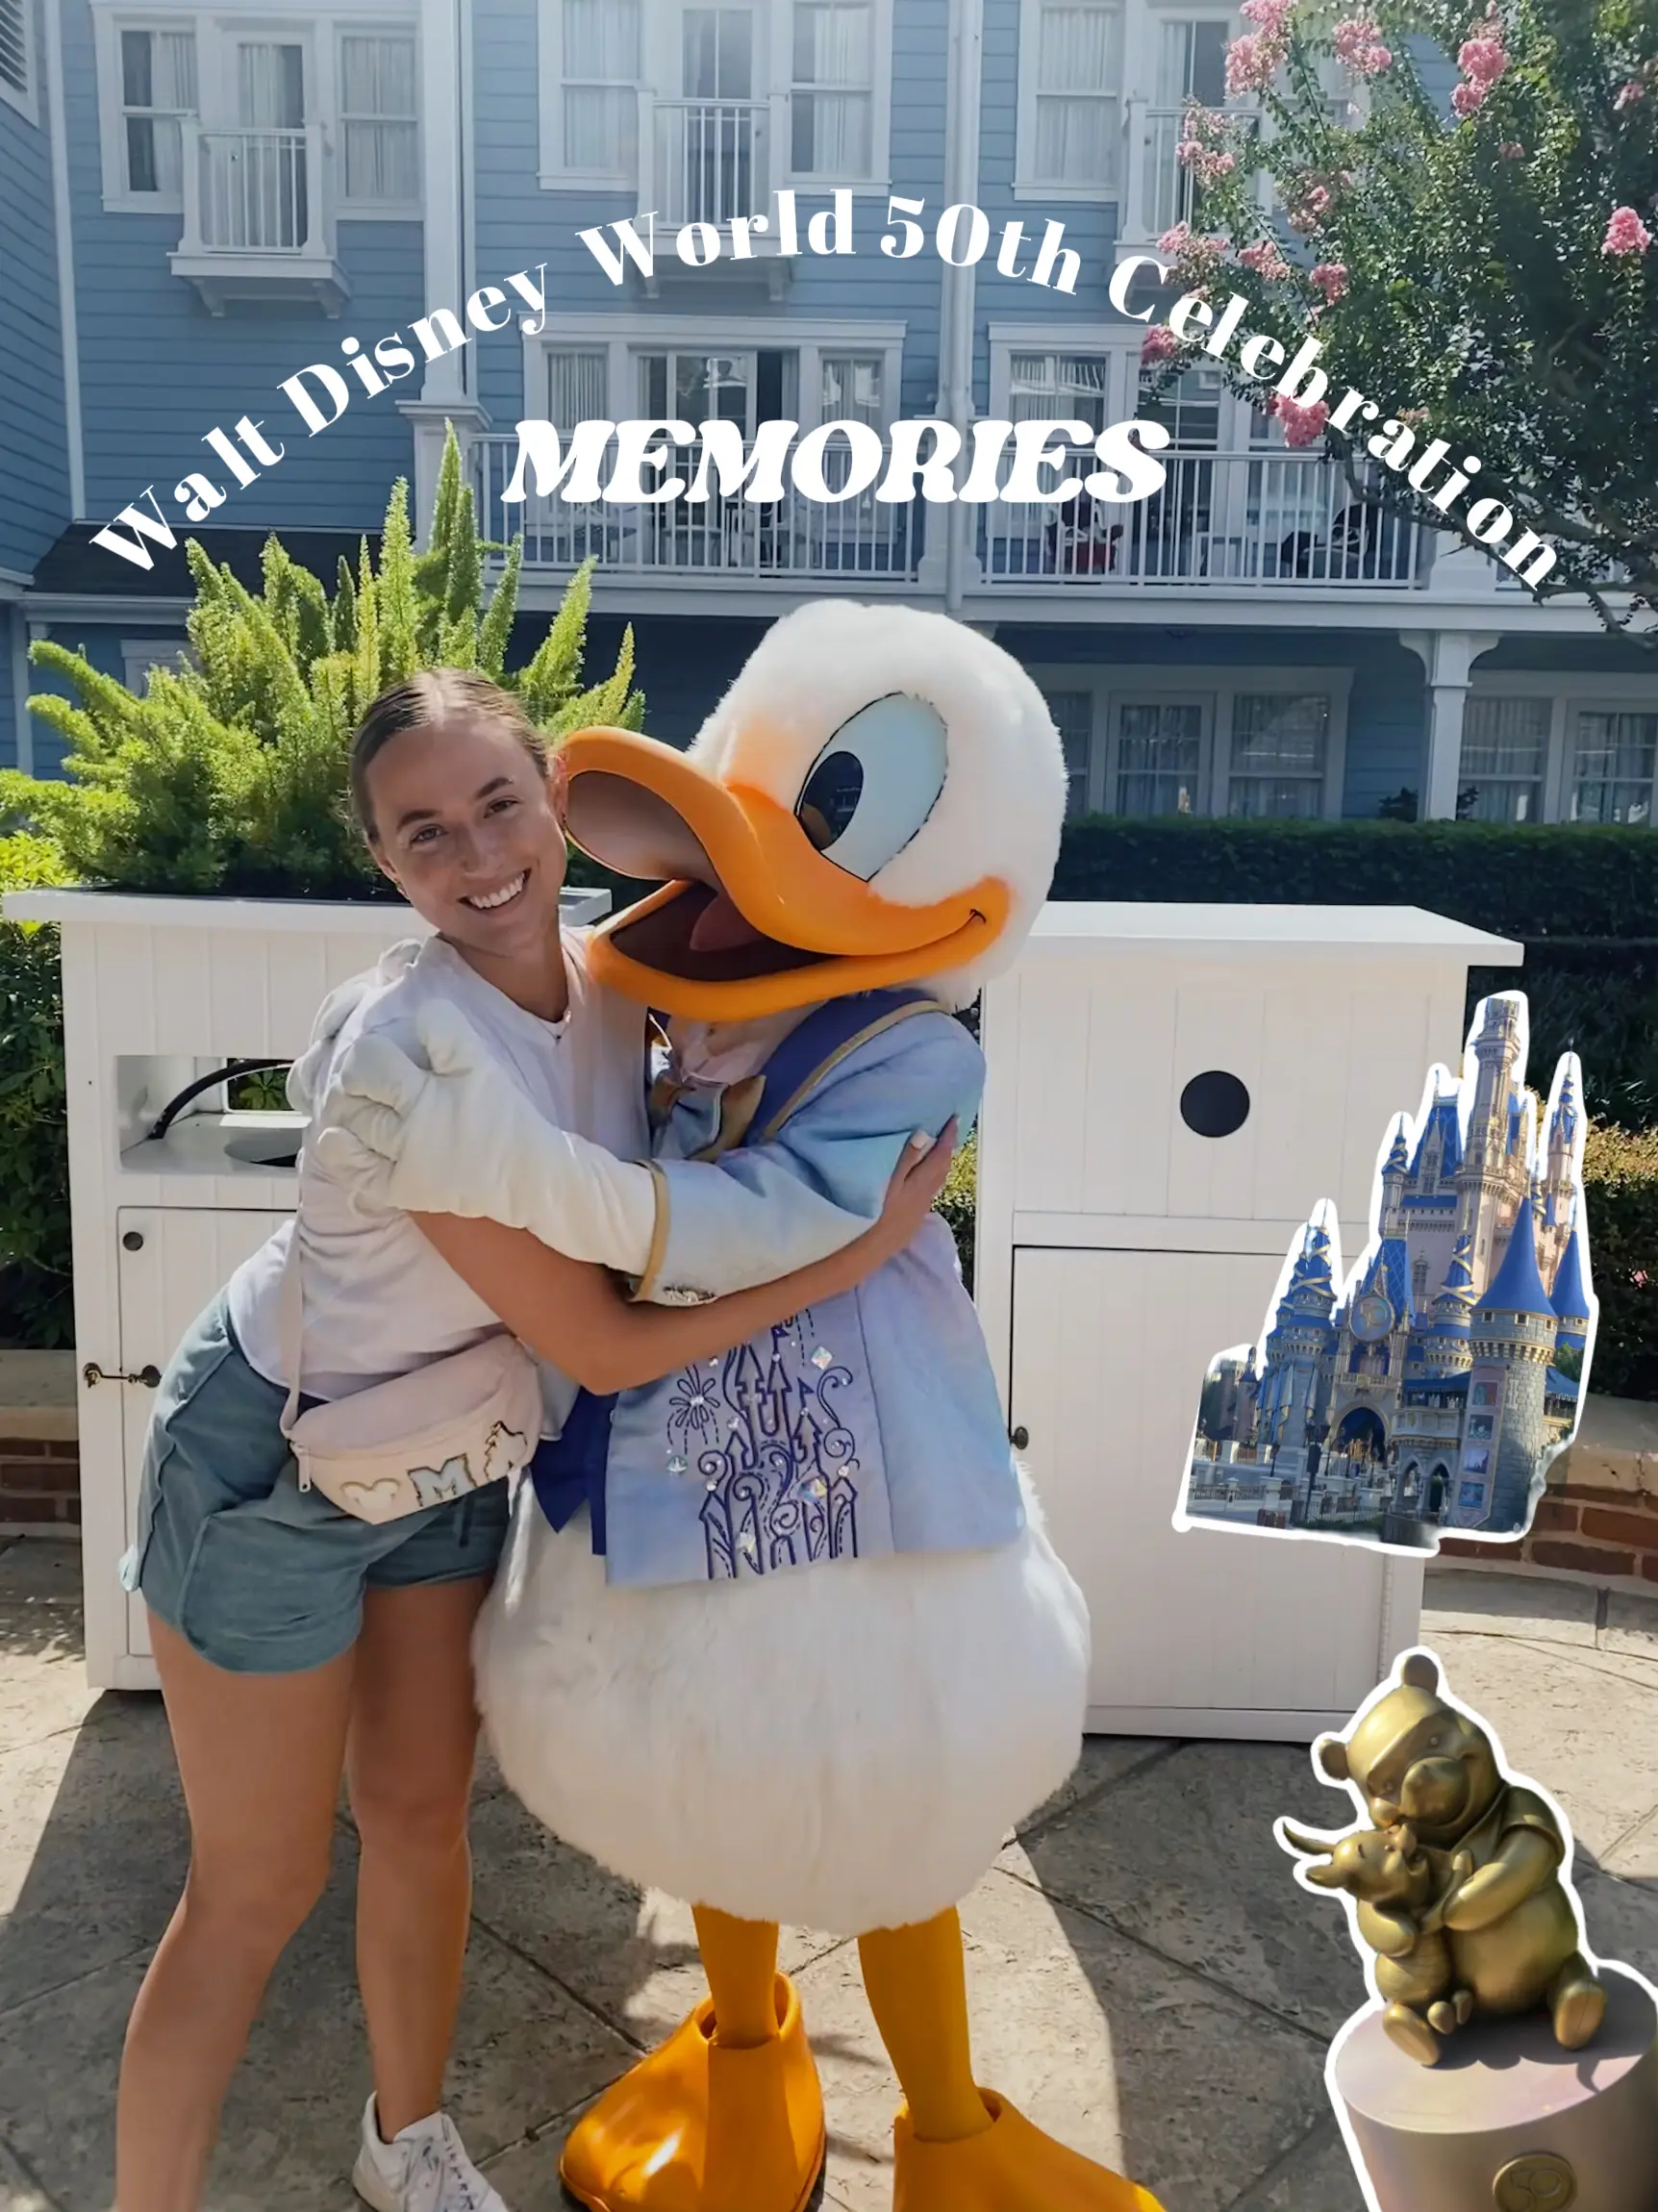 Walt Disney World 50th Celebration - Memories's images